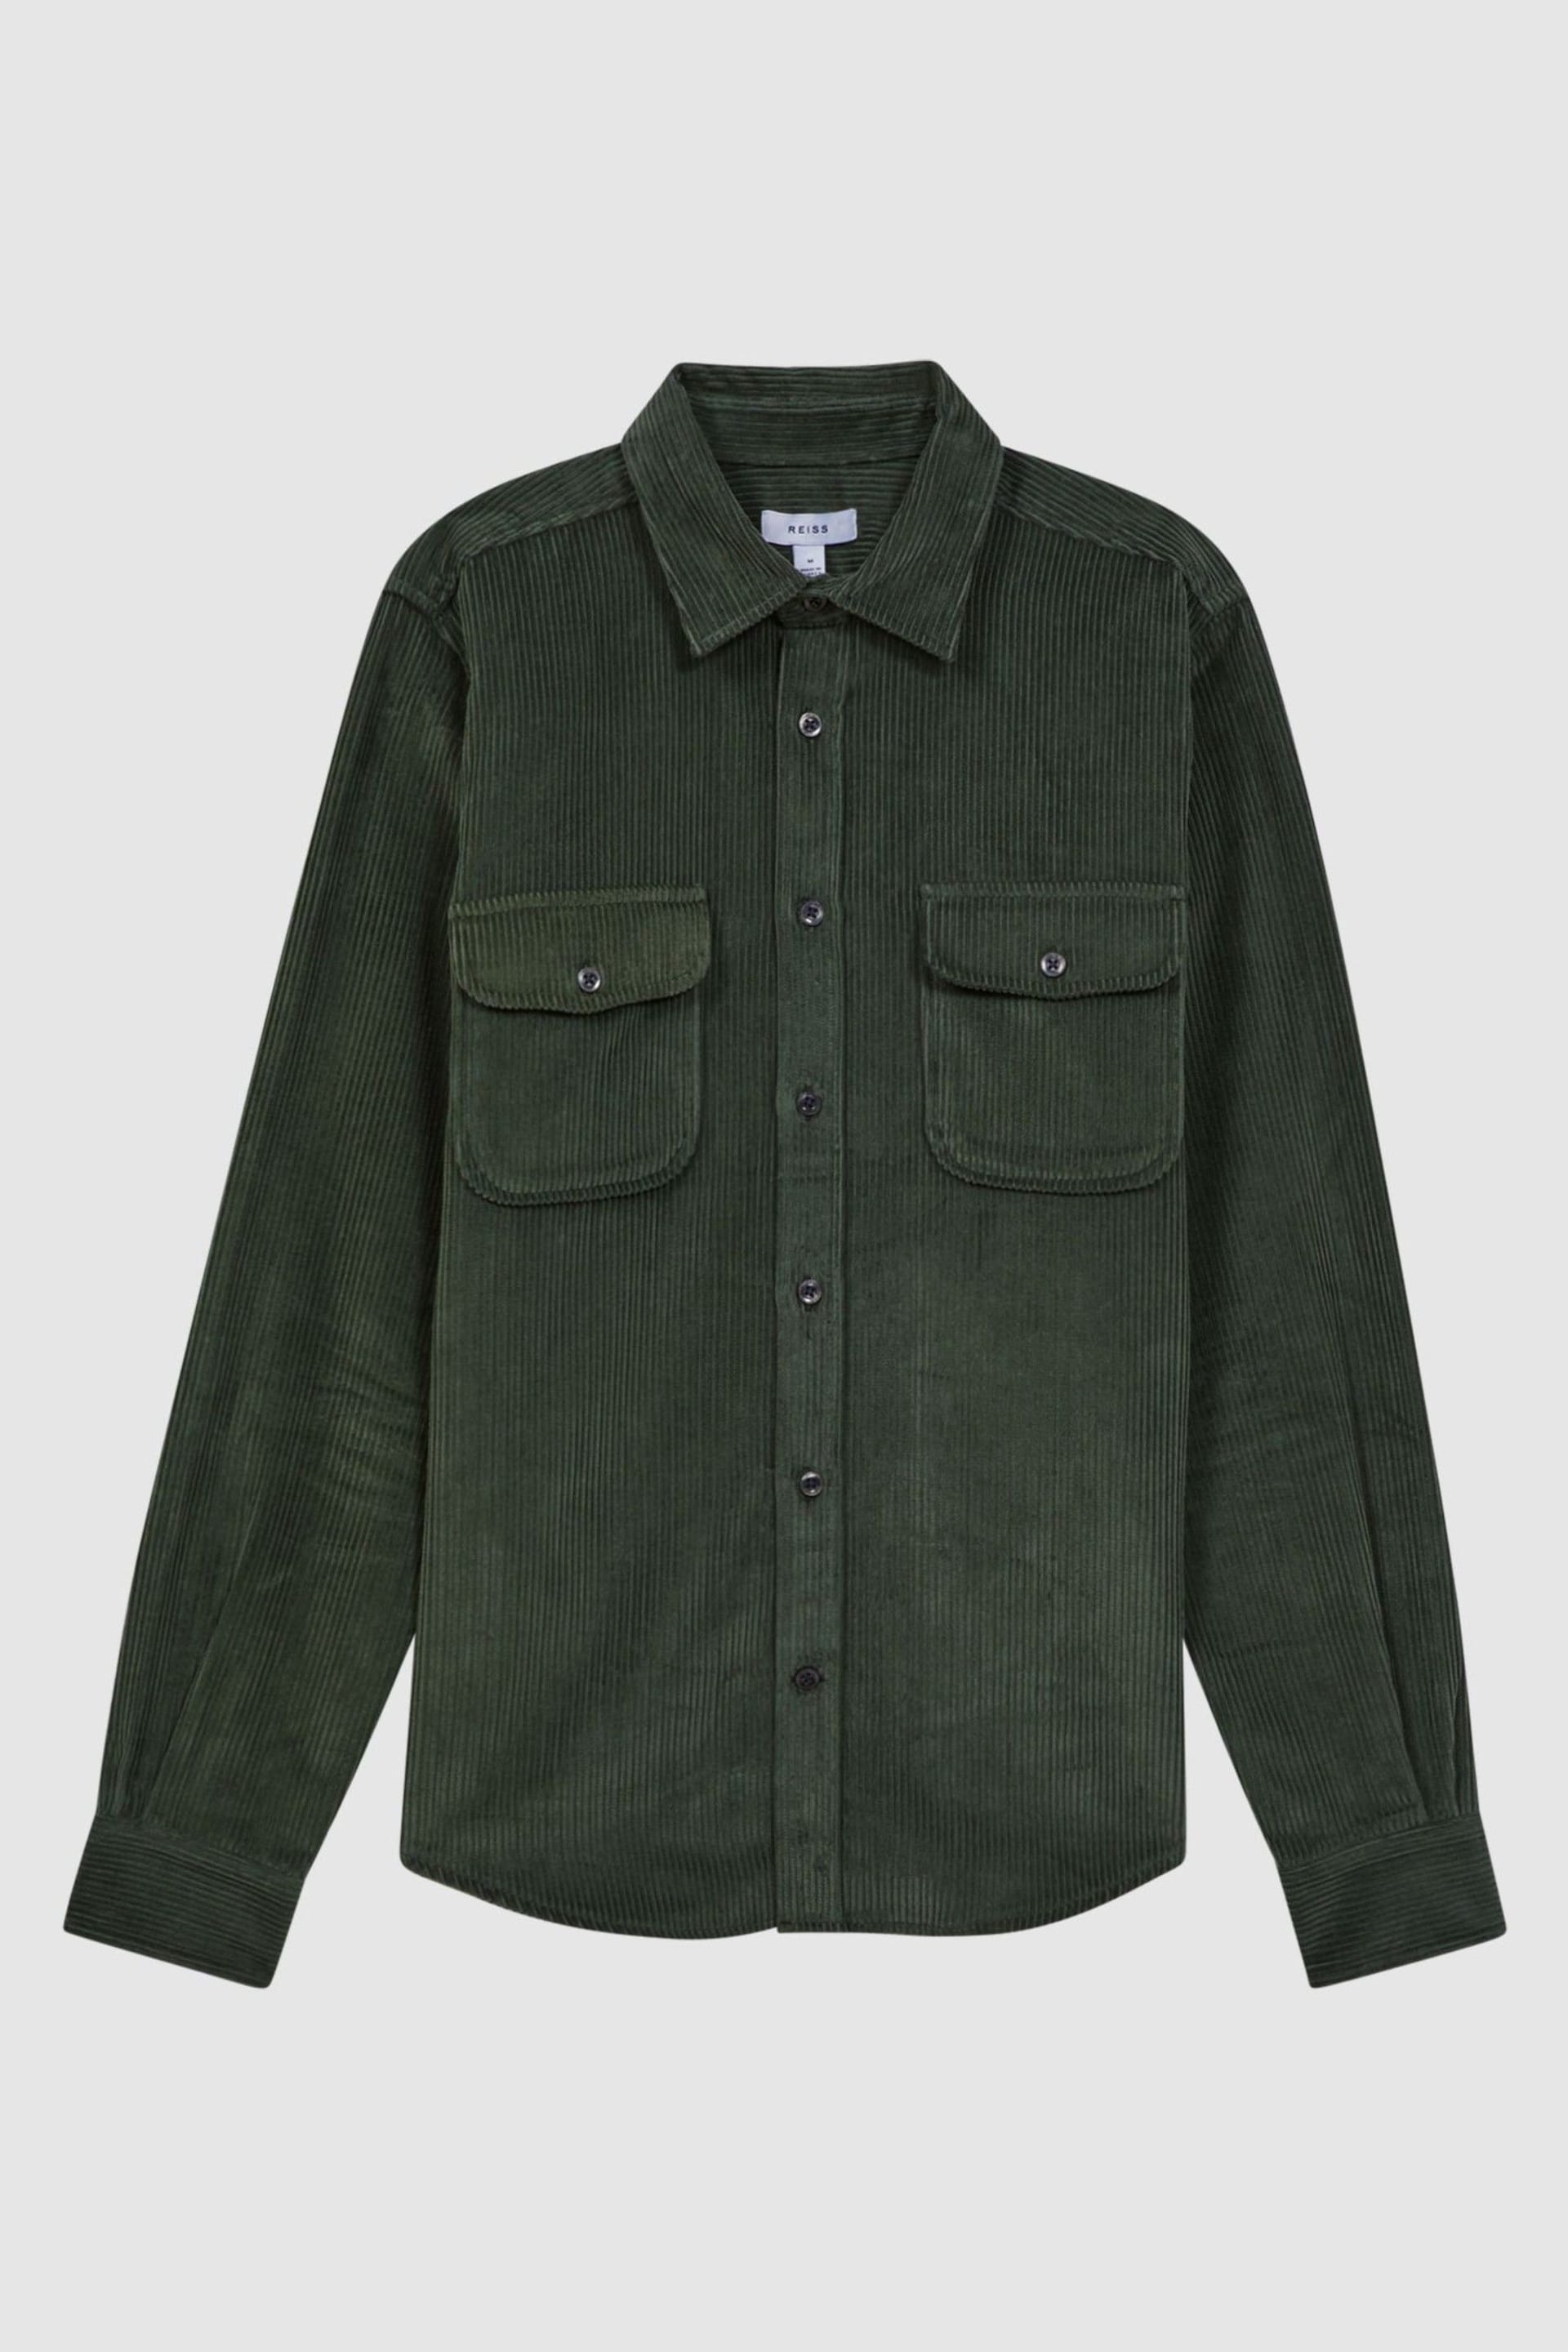 Reiss Green Bonucci Corduroy Twin Pocket Overshirt - Image 2 of 4